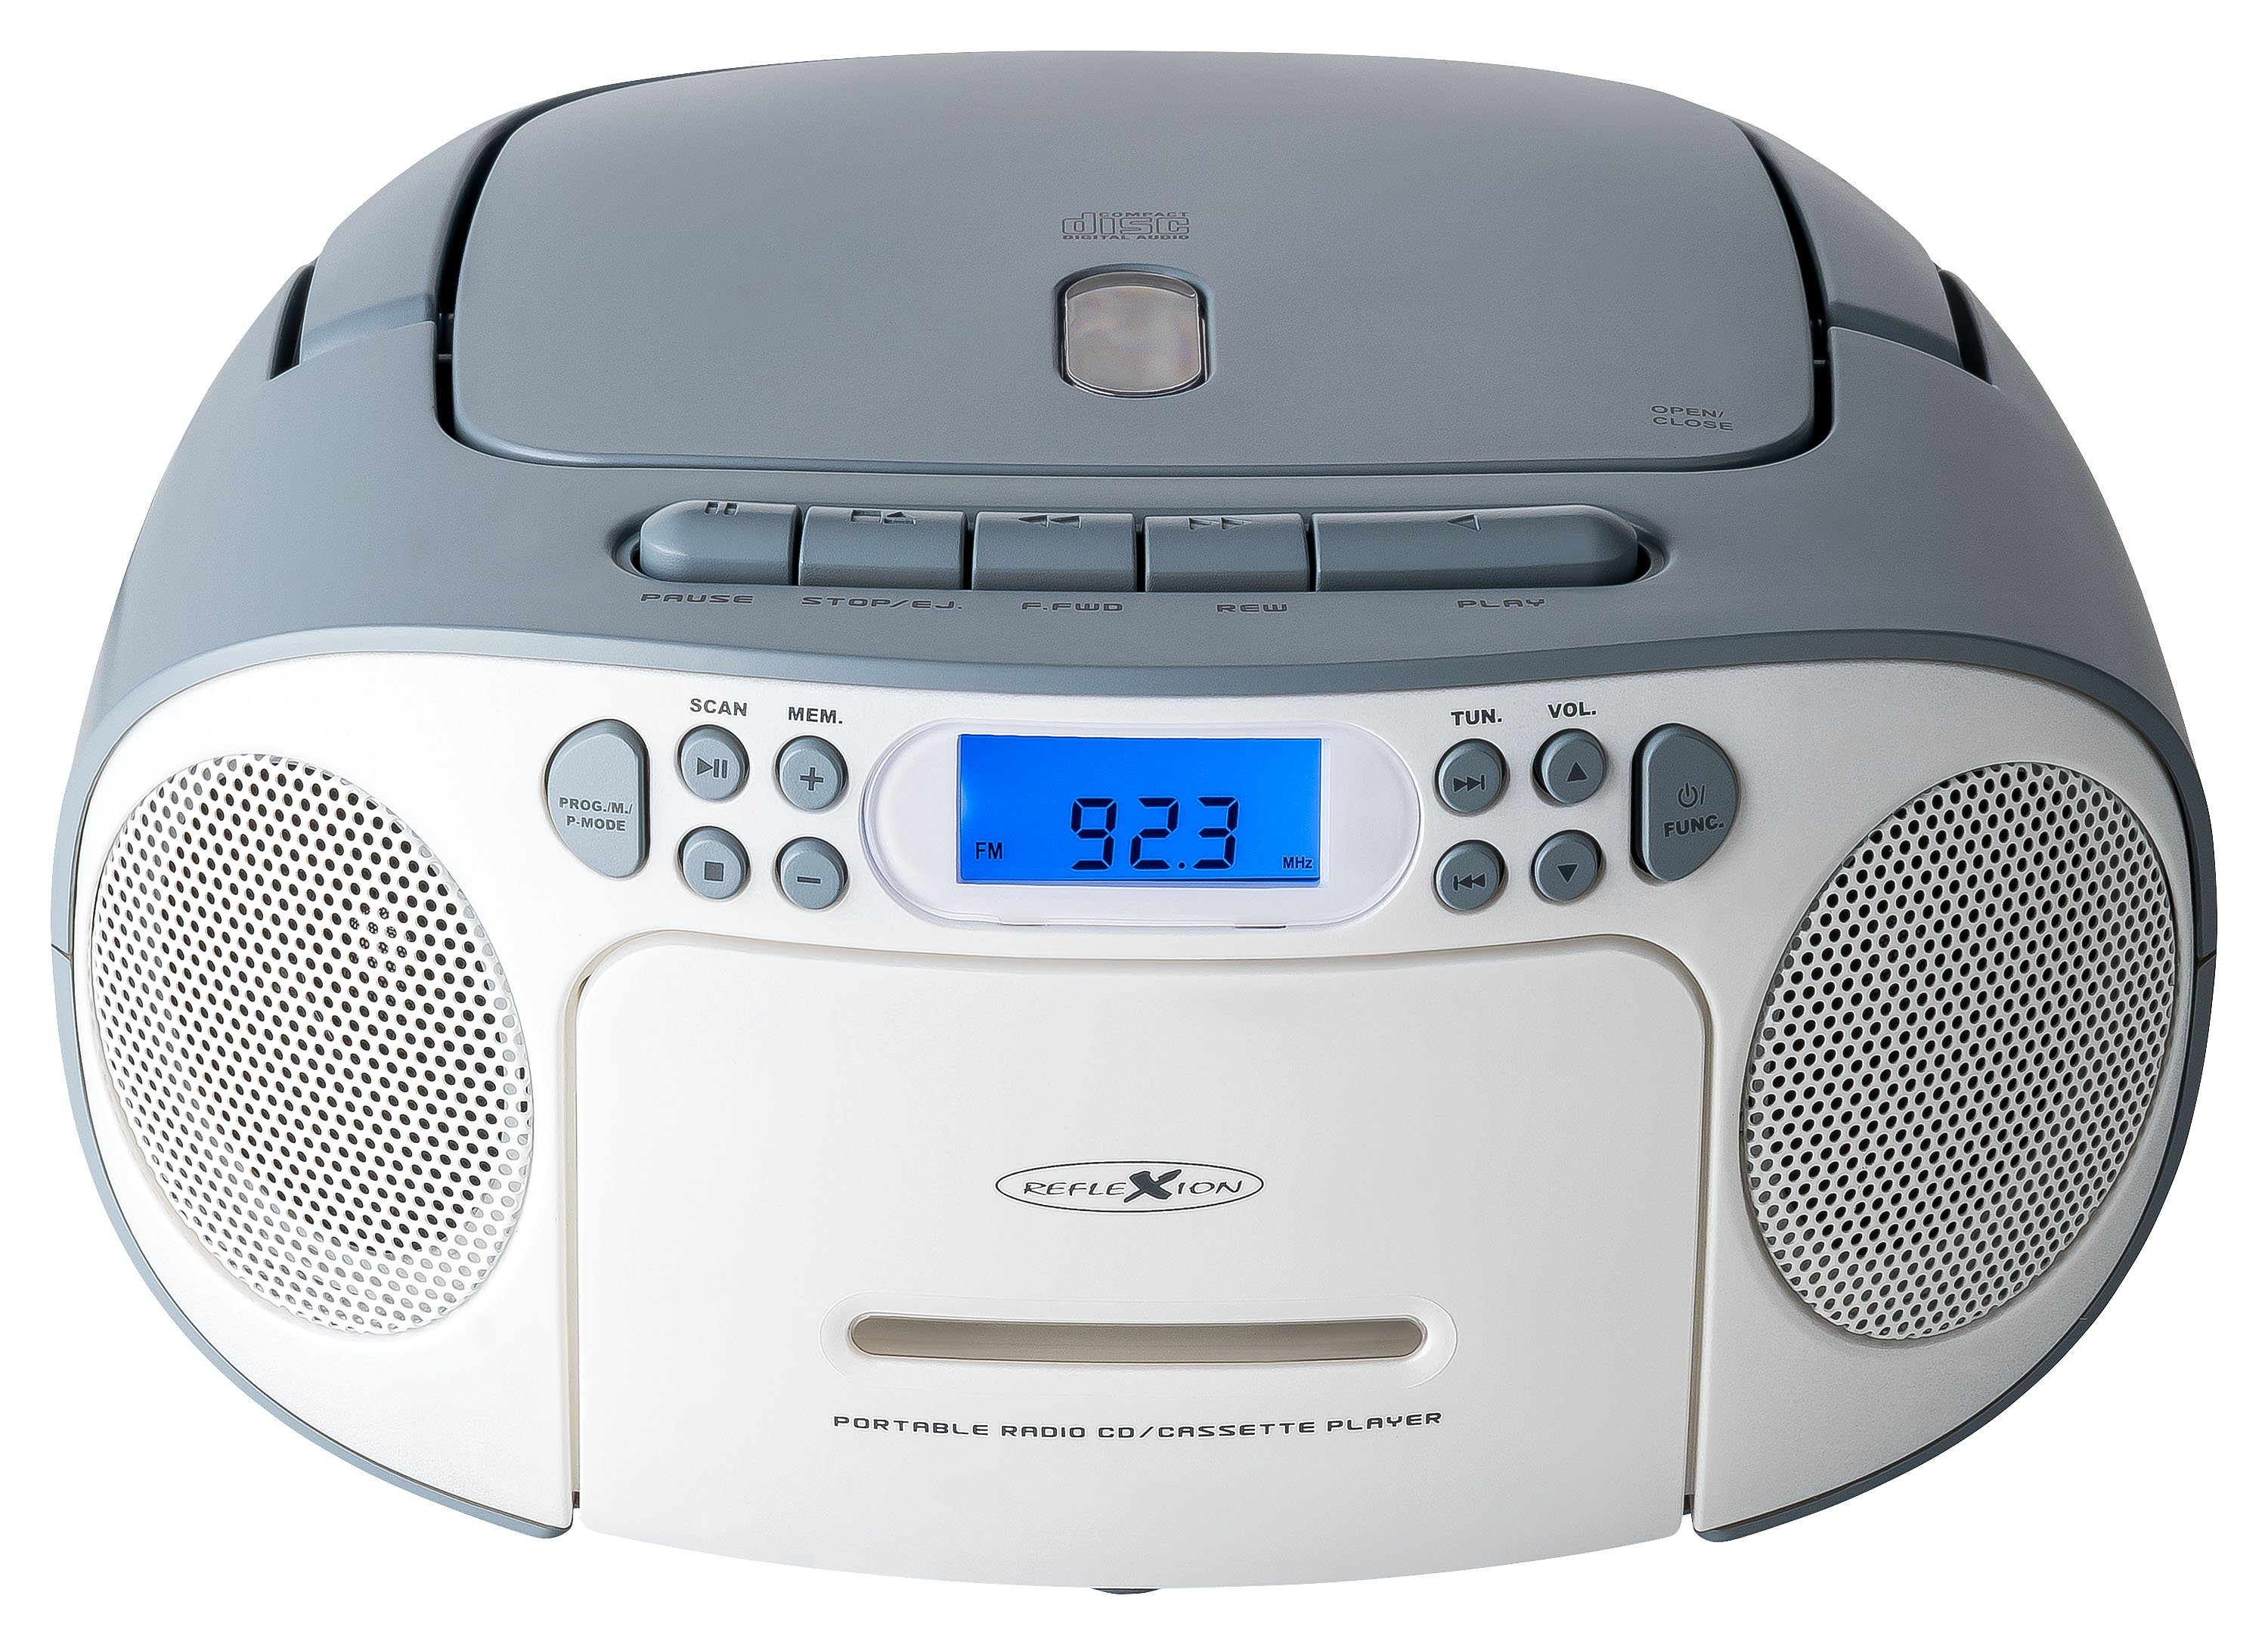 Radio, PLL LCD-Display, AUX-Eingang, Reflexion weiß/blau Boombox (UKW Tragbare Stereo Kopfhörer-Anschluss) CD/Radio/Kassette, RCR2260 W, 20 Boombox